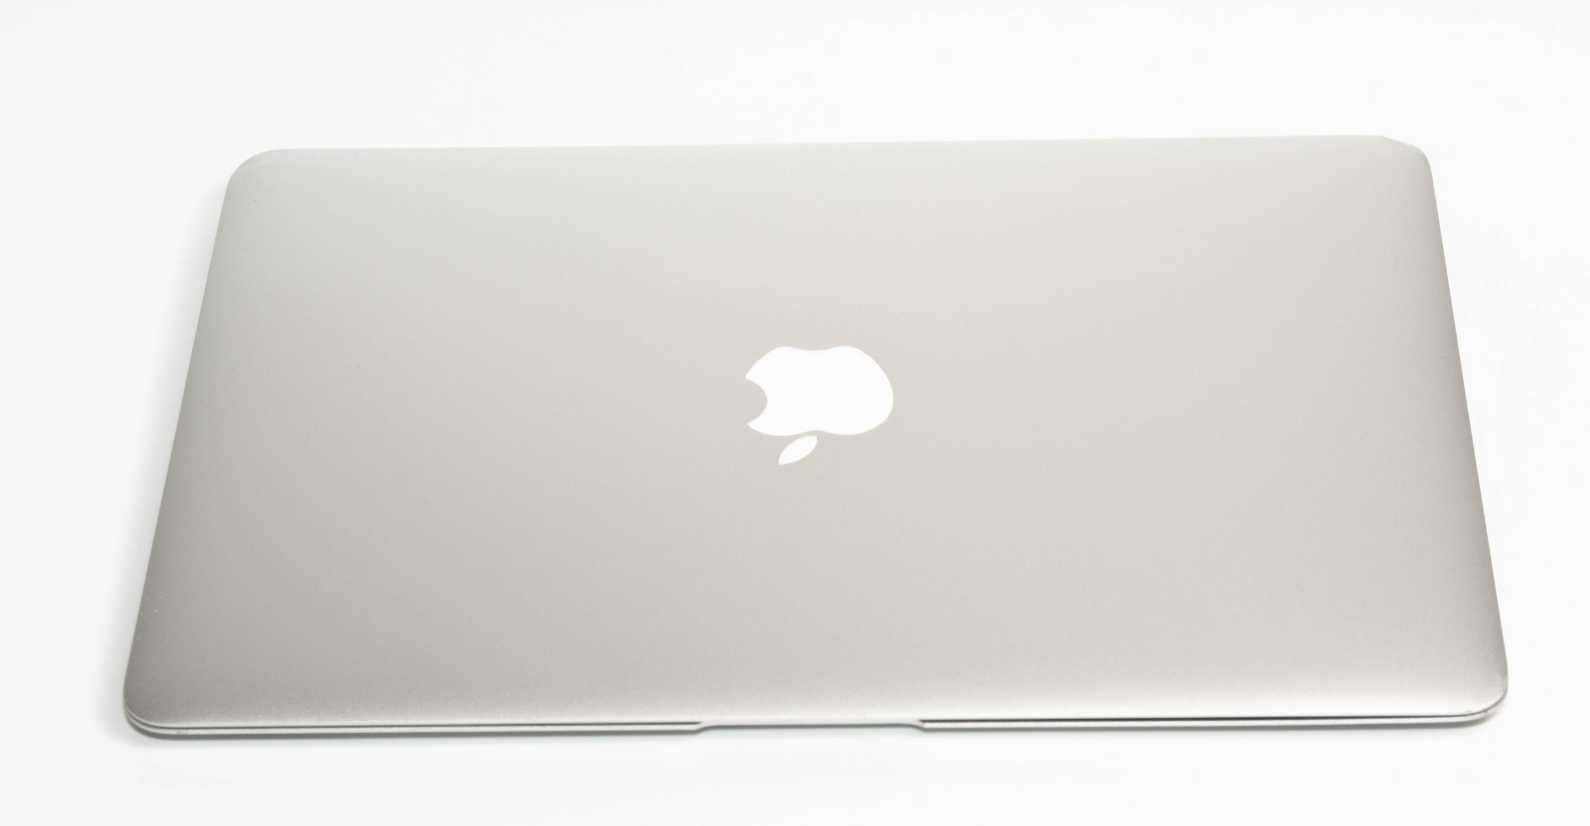 Laptop Apple MacBook Air 13,3" CORE i5 RAM 8GB SSD 512GB ŁADNY